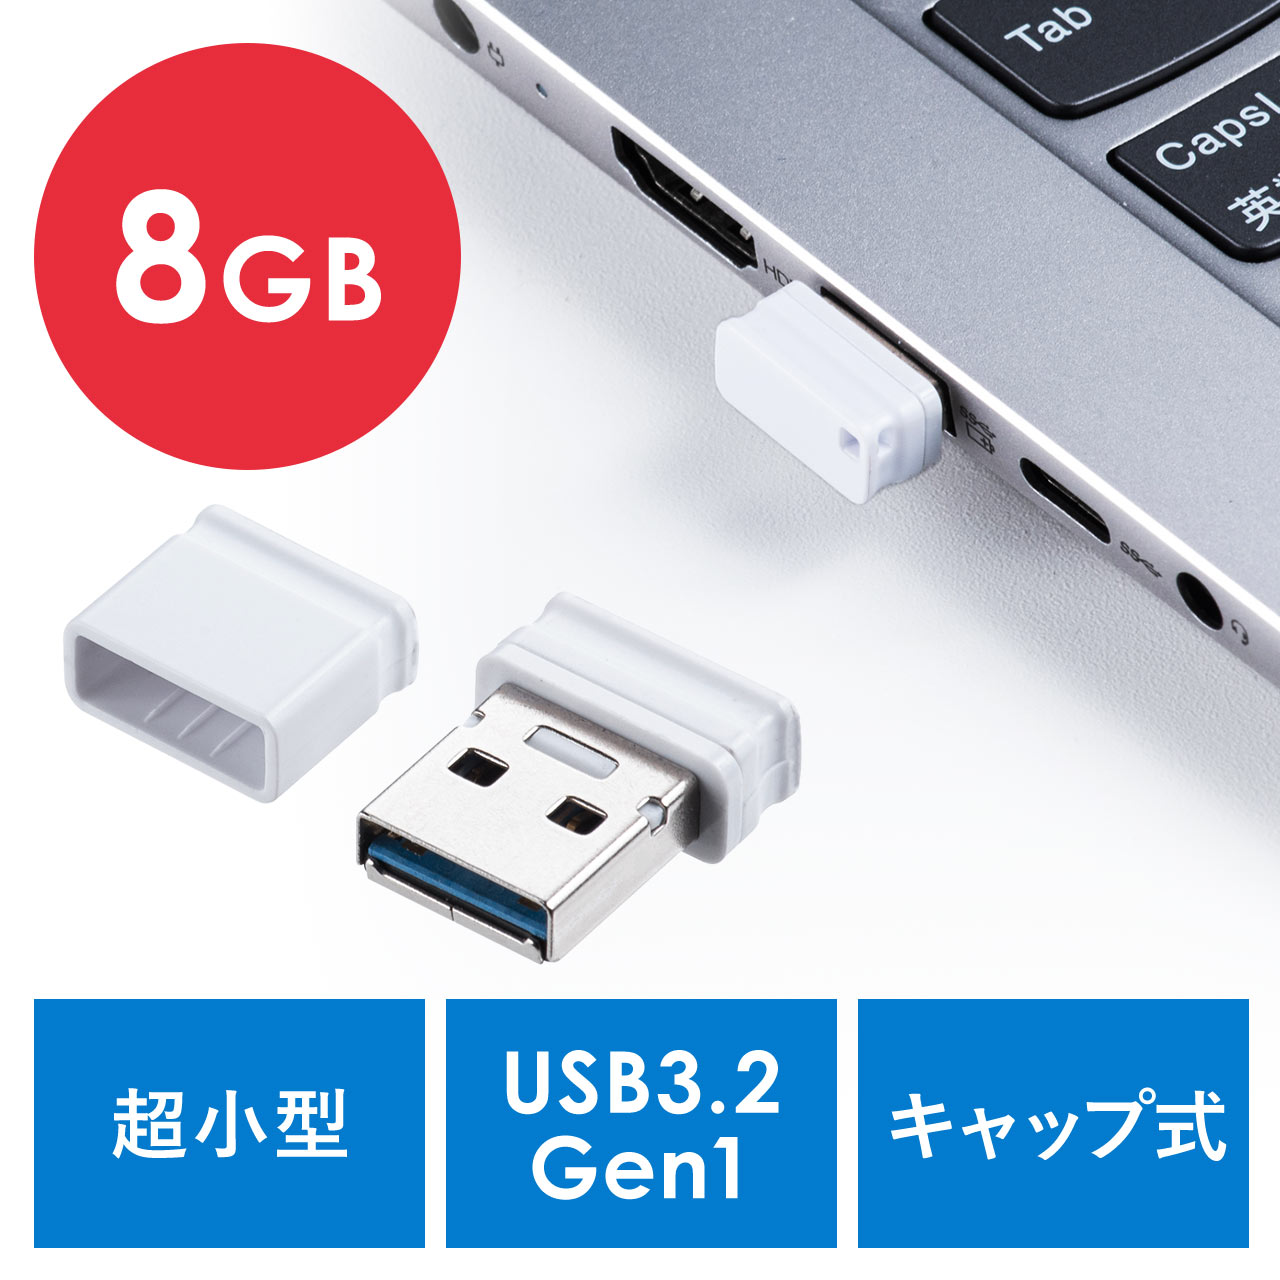 USBi^Ef[^]ELbvE8GBEUSB3.2 Gen1EzCgj 600-3UP8GW